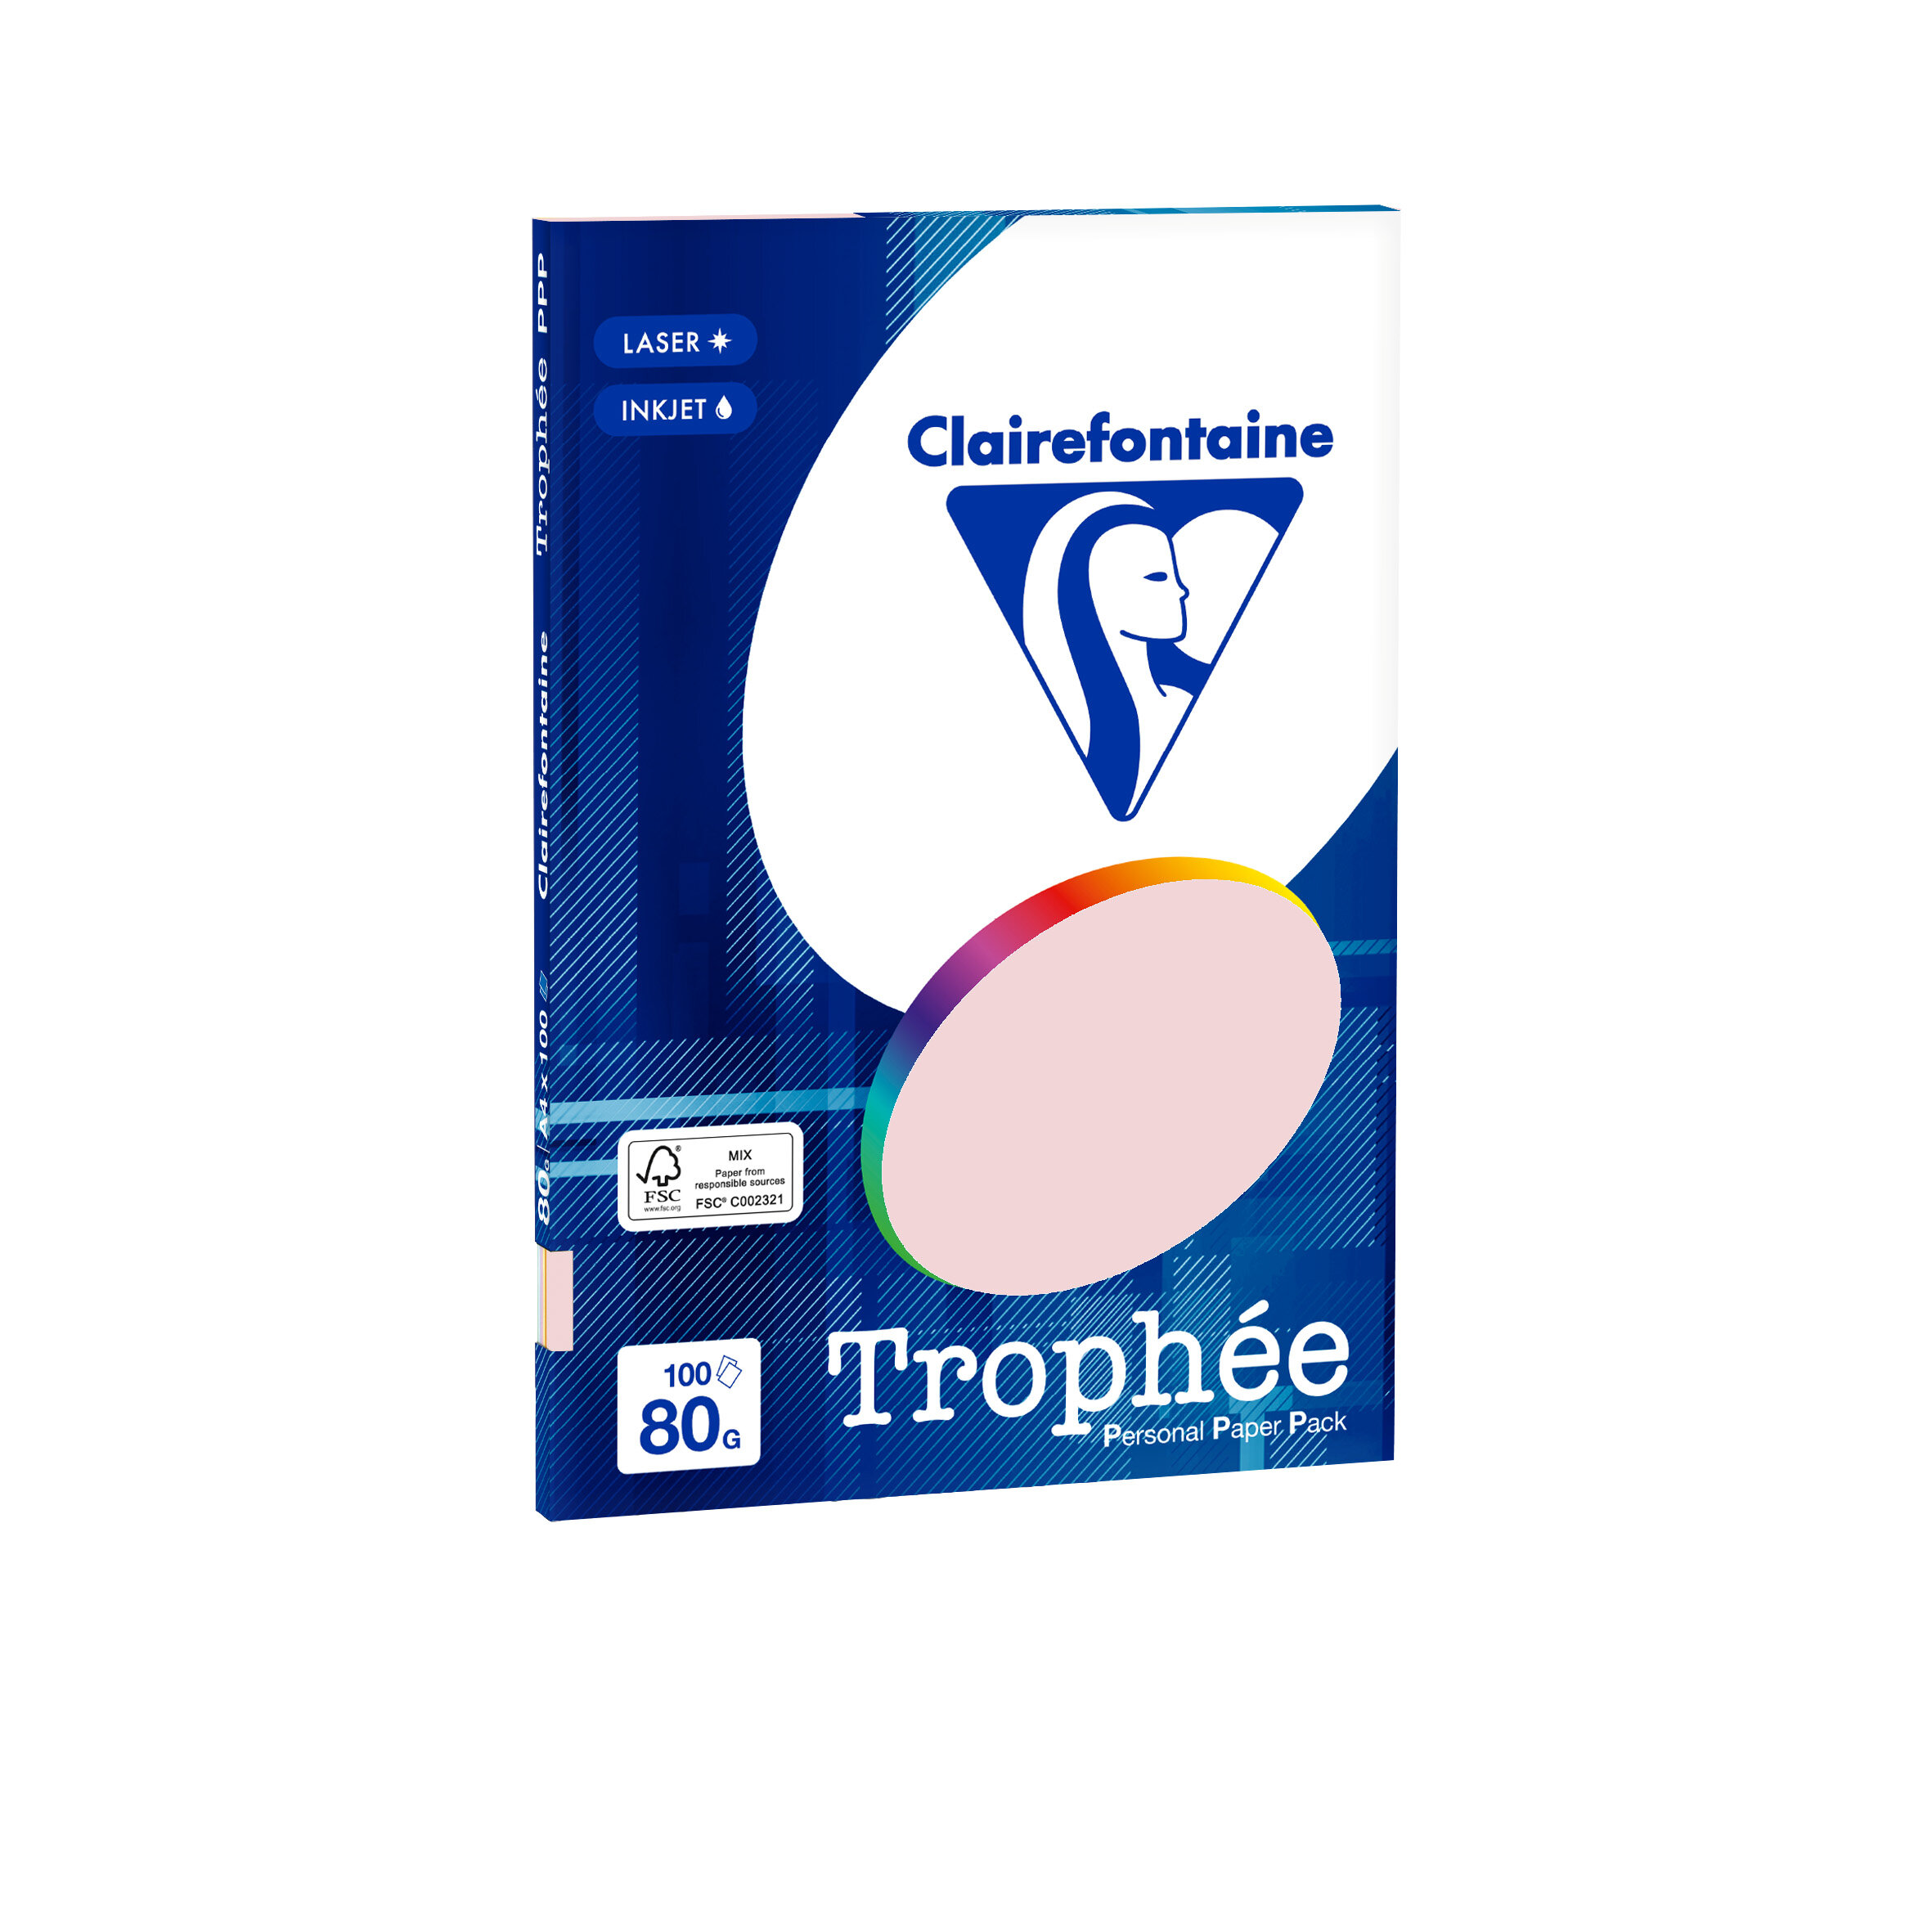 Clairefontaine Trophée gekleurd kantoorpapier mini